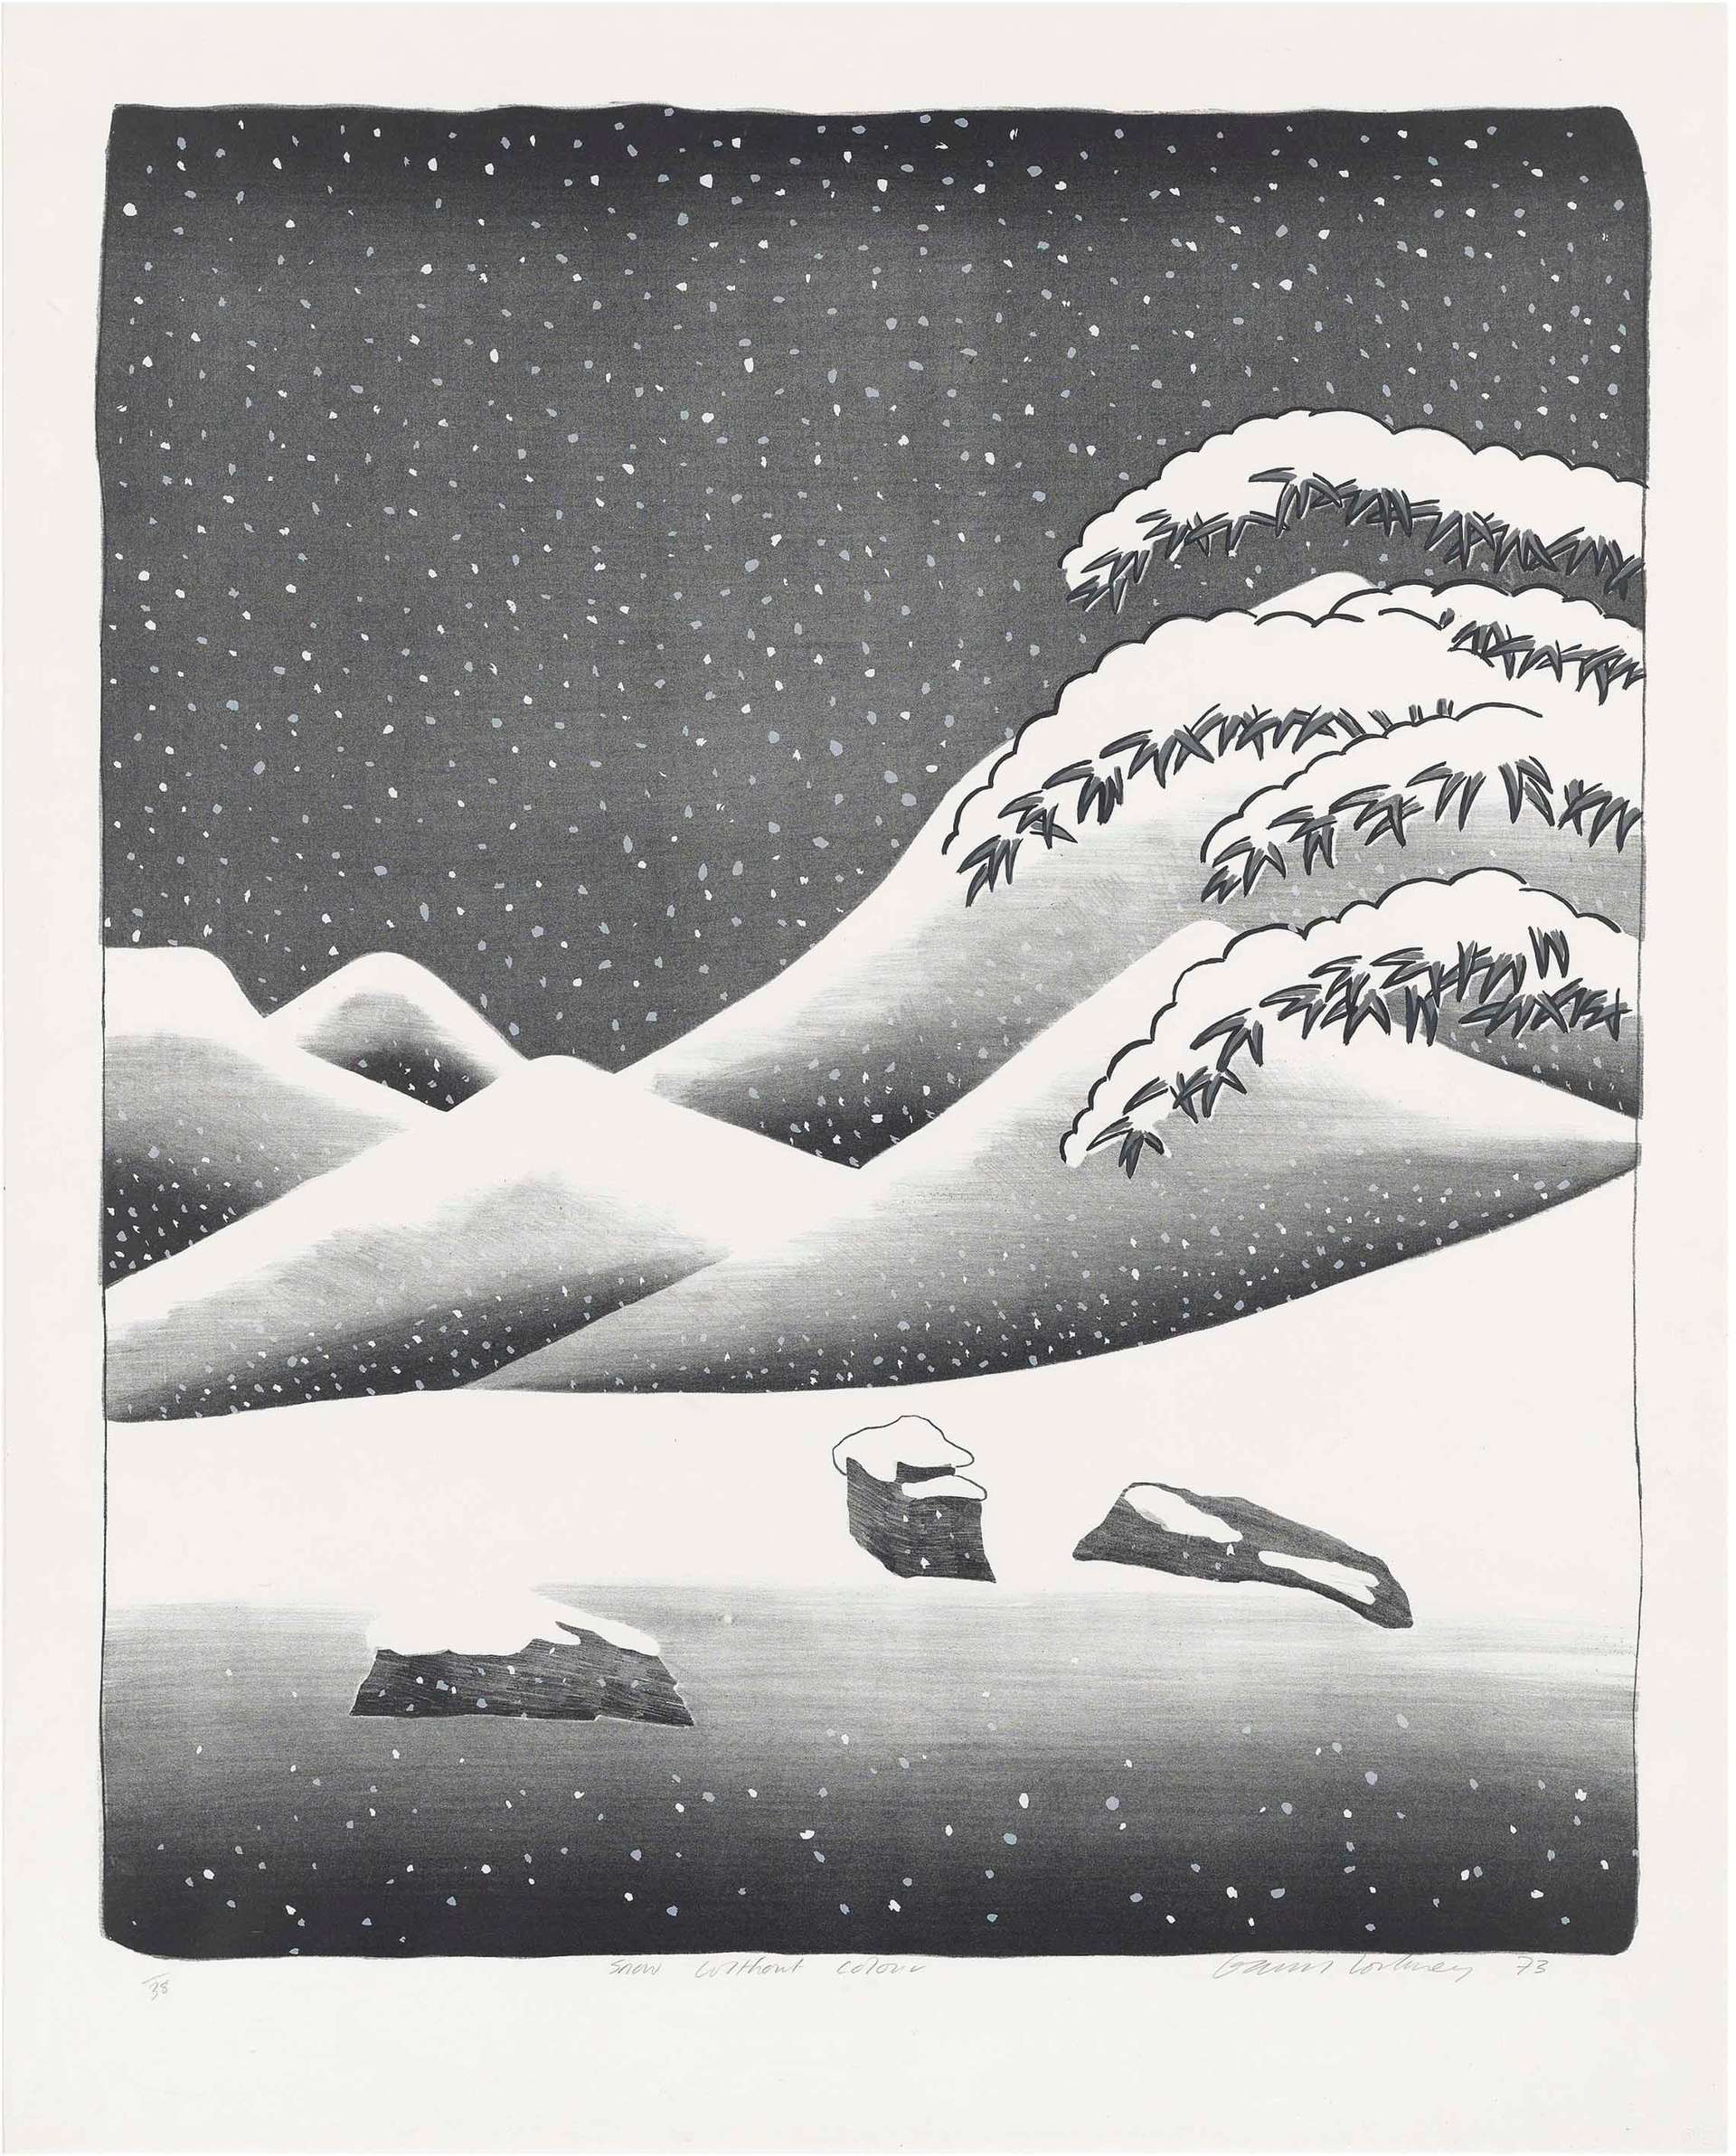 A planographic print in monochrome depicting a snowy scene.